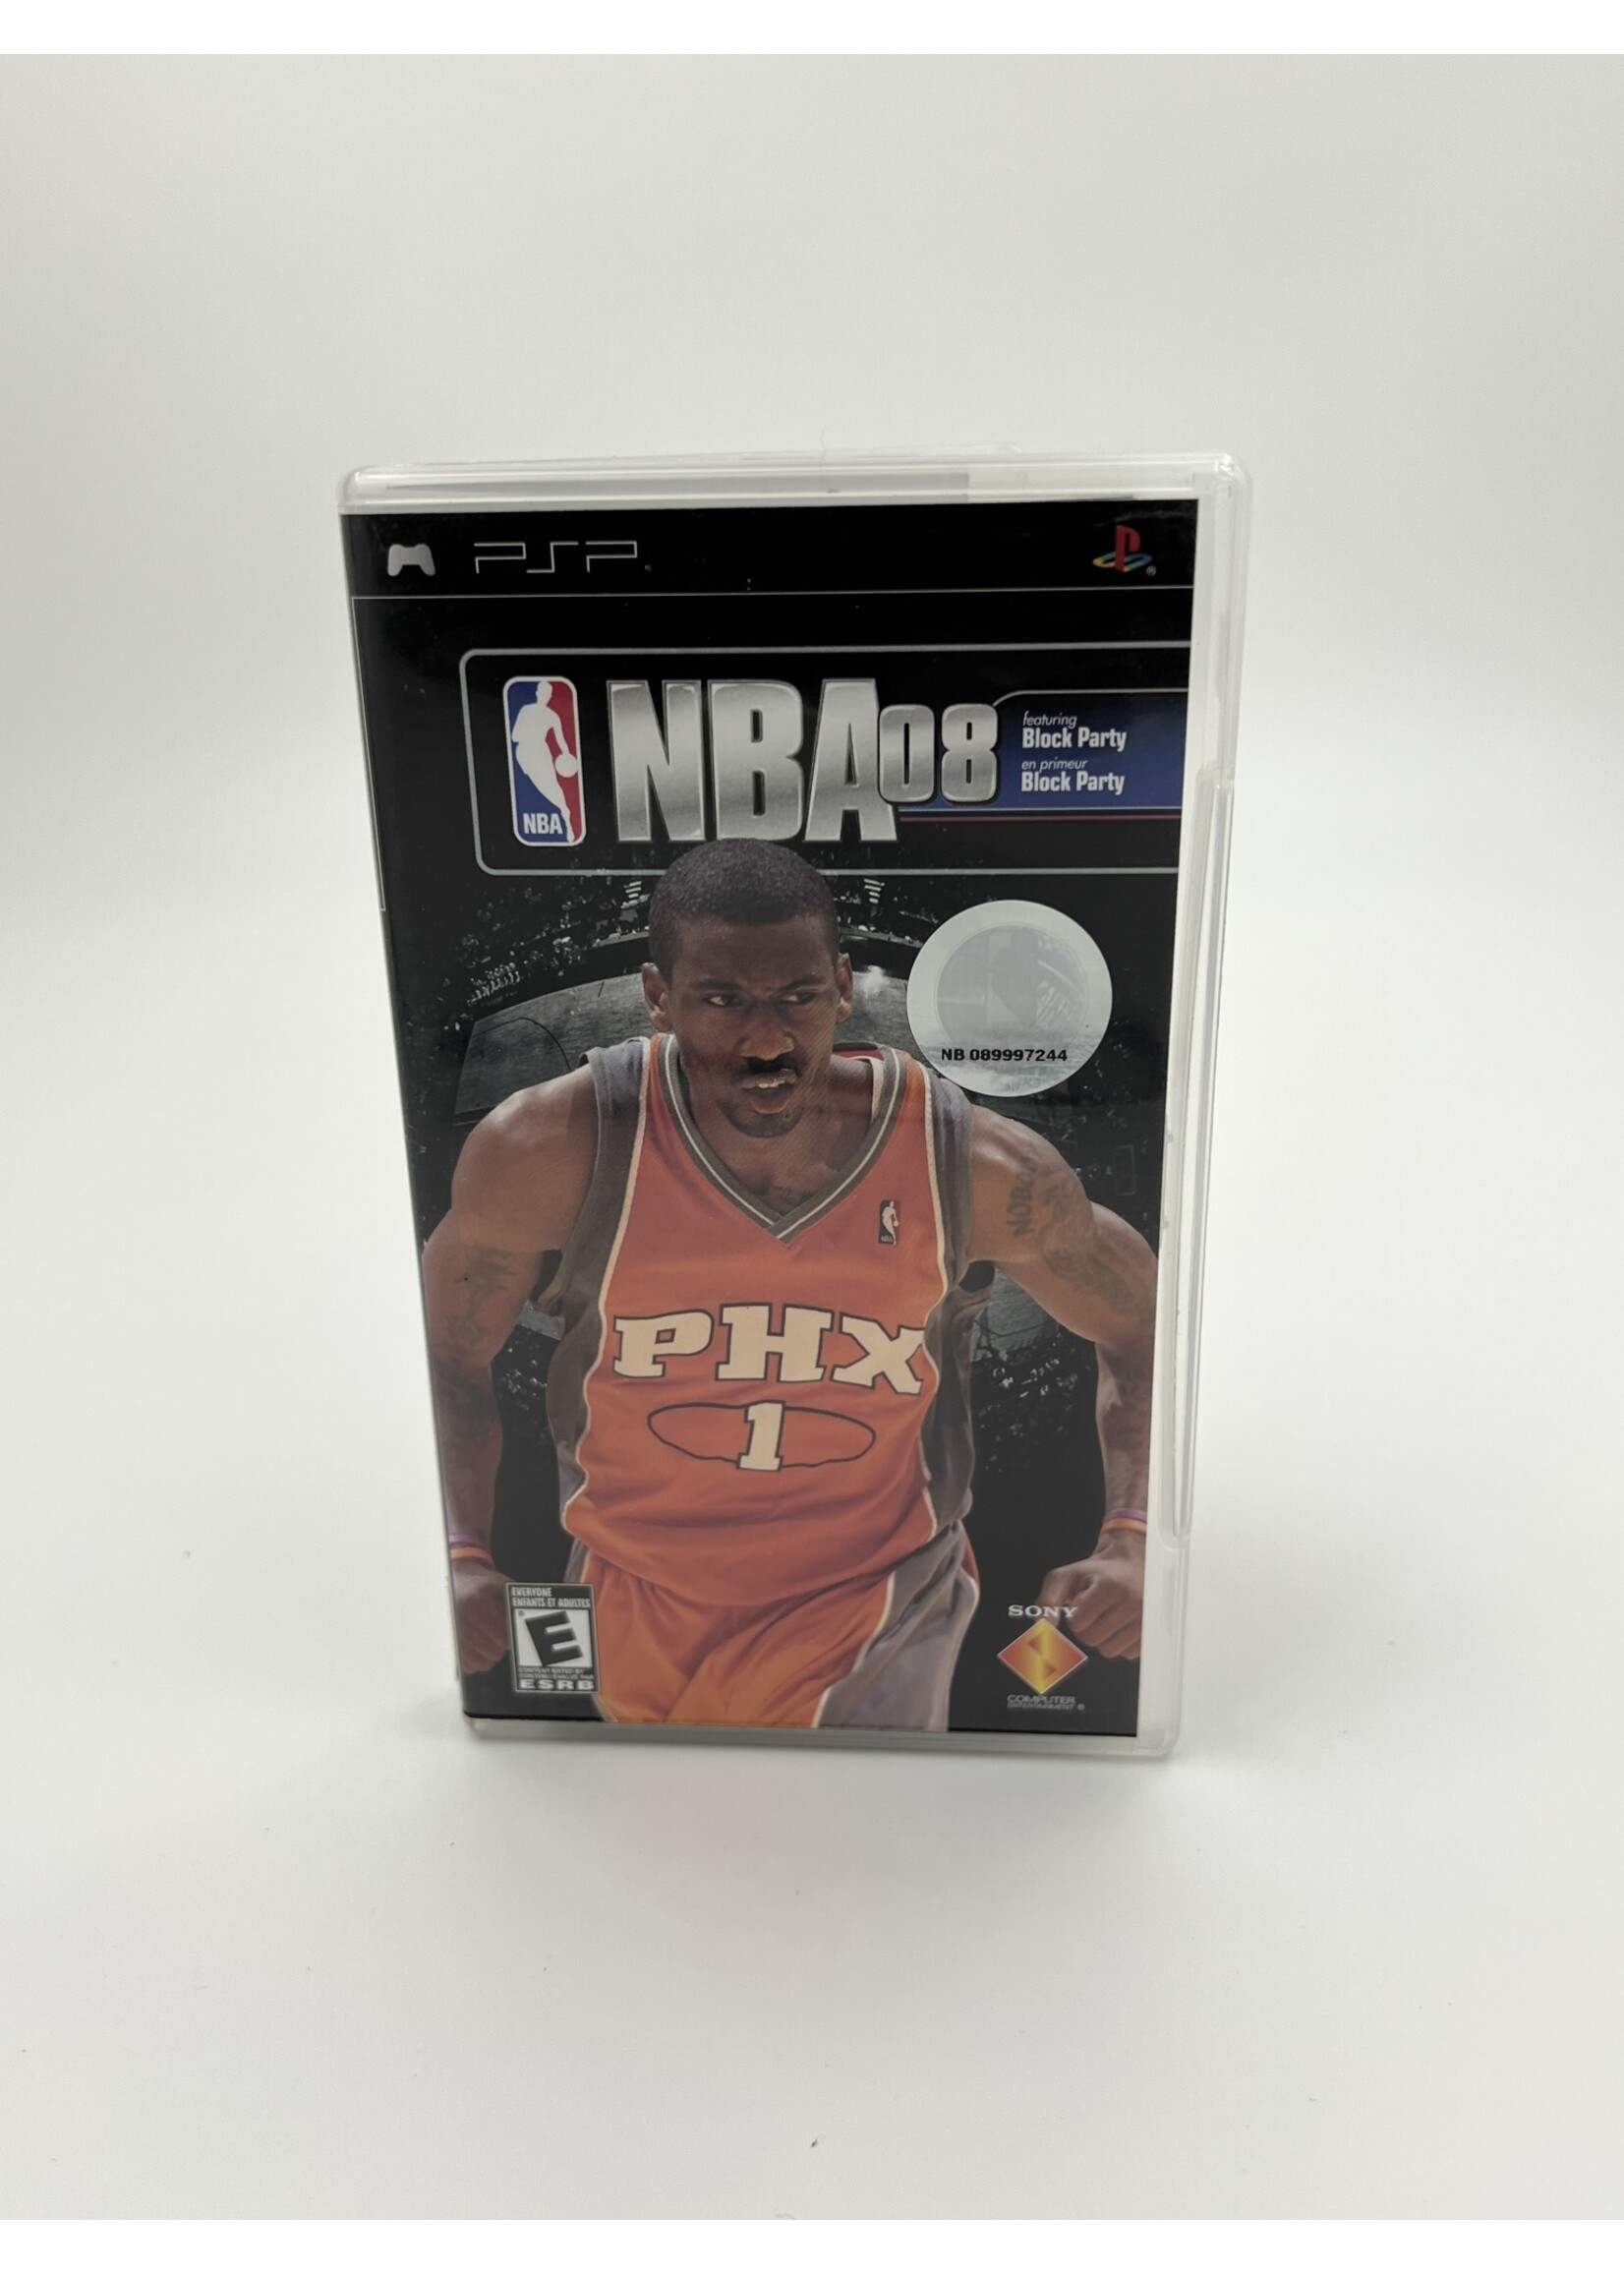 Sony NBA 08 PSP